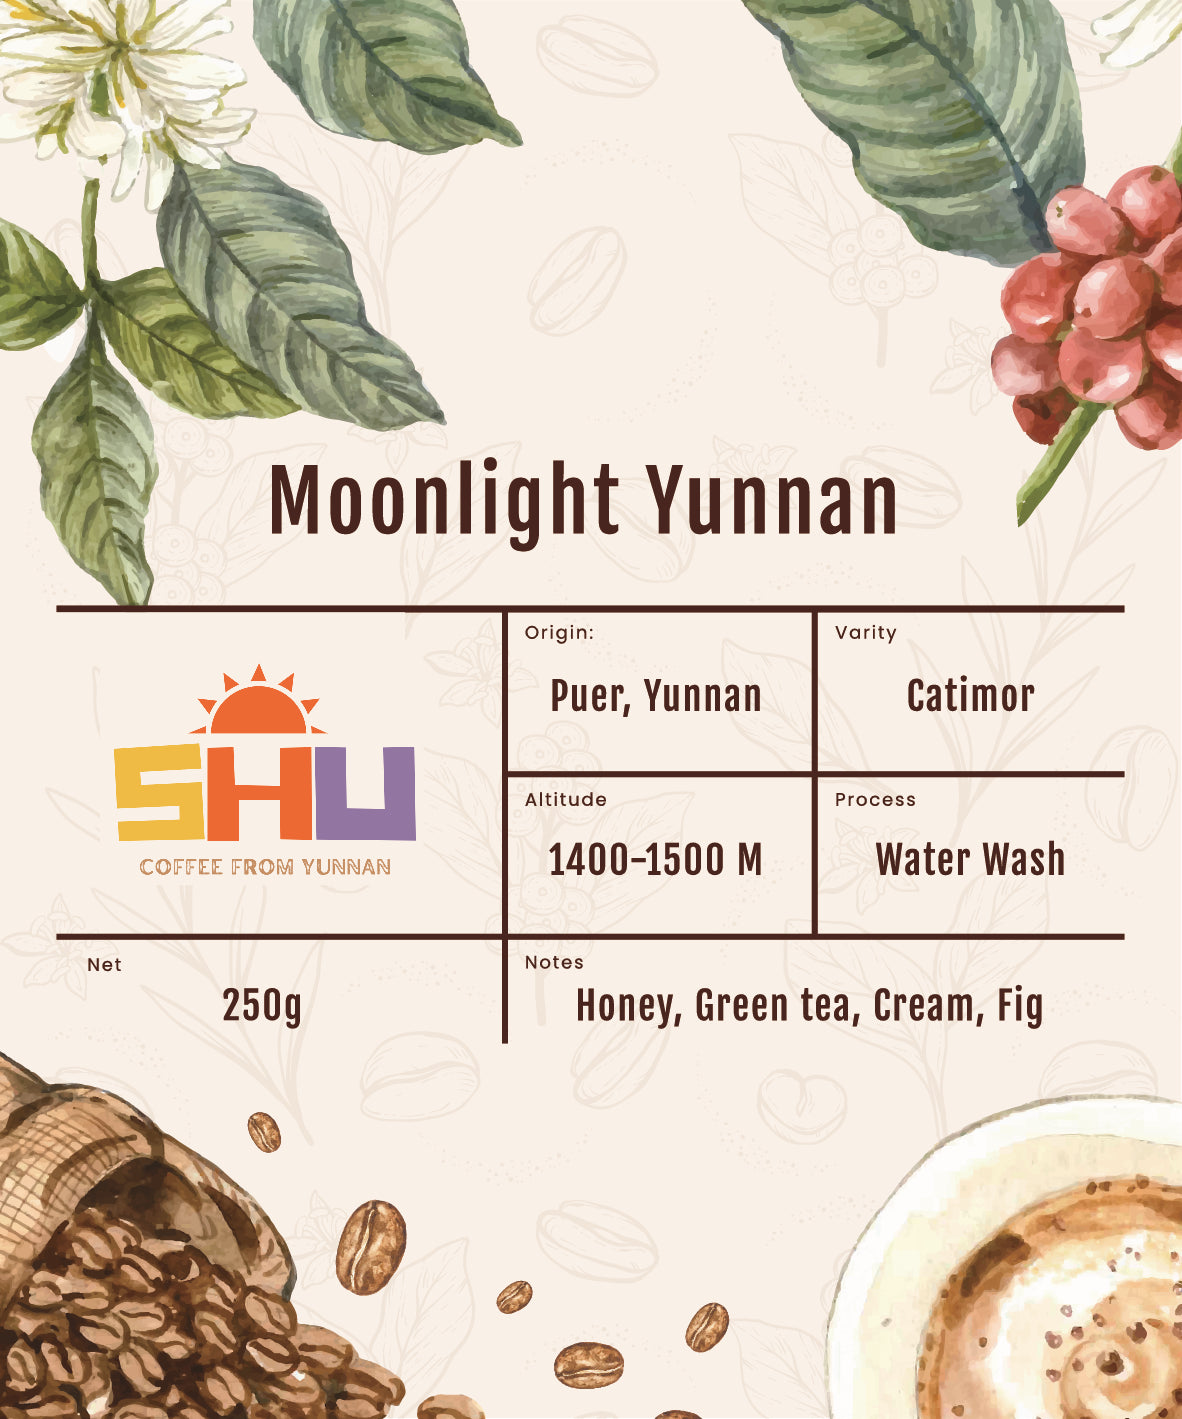 Moonlight Yunnan: Single Origin Coffee Bean from Yunnan